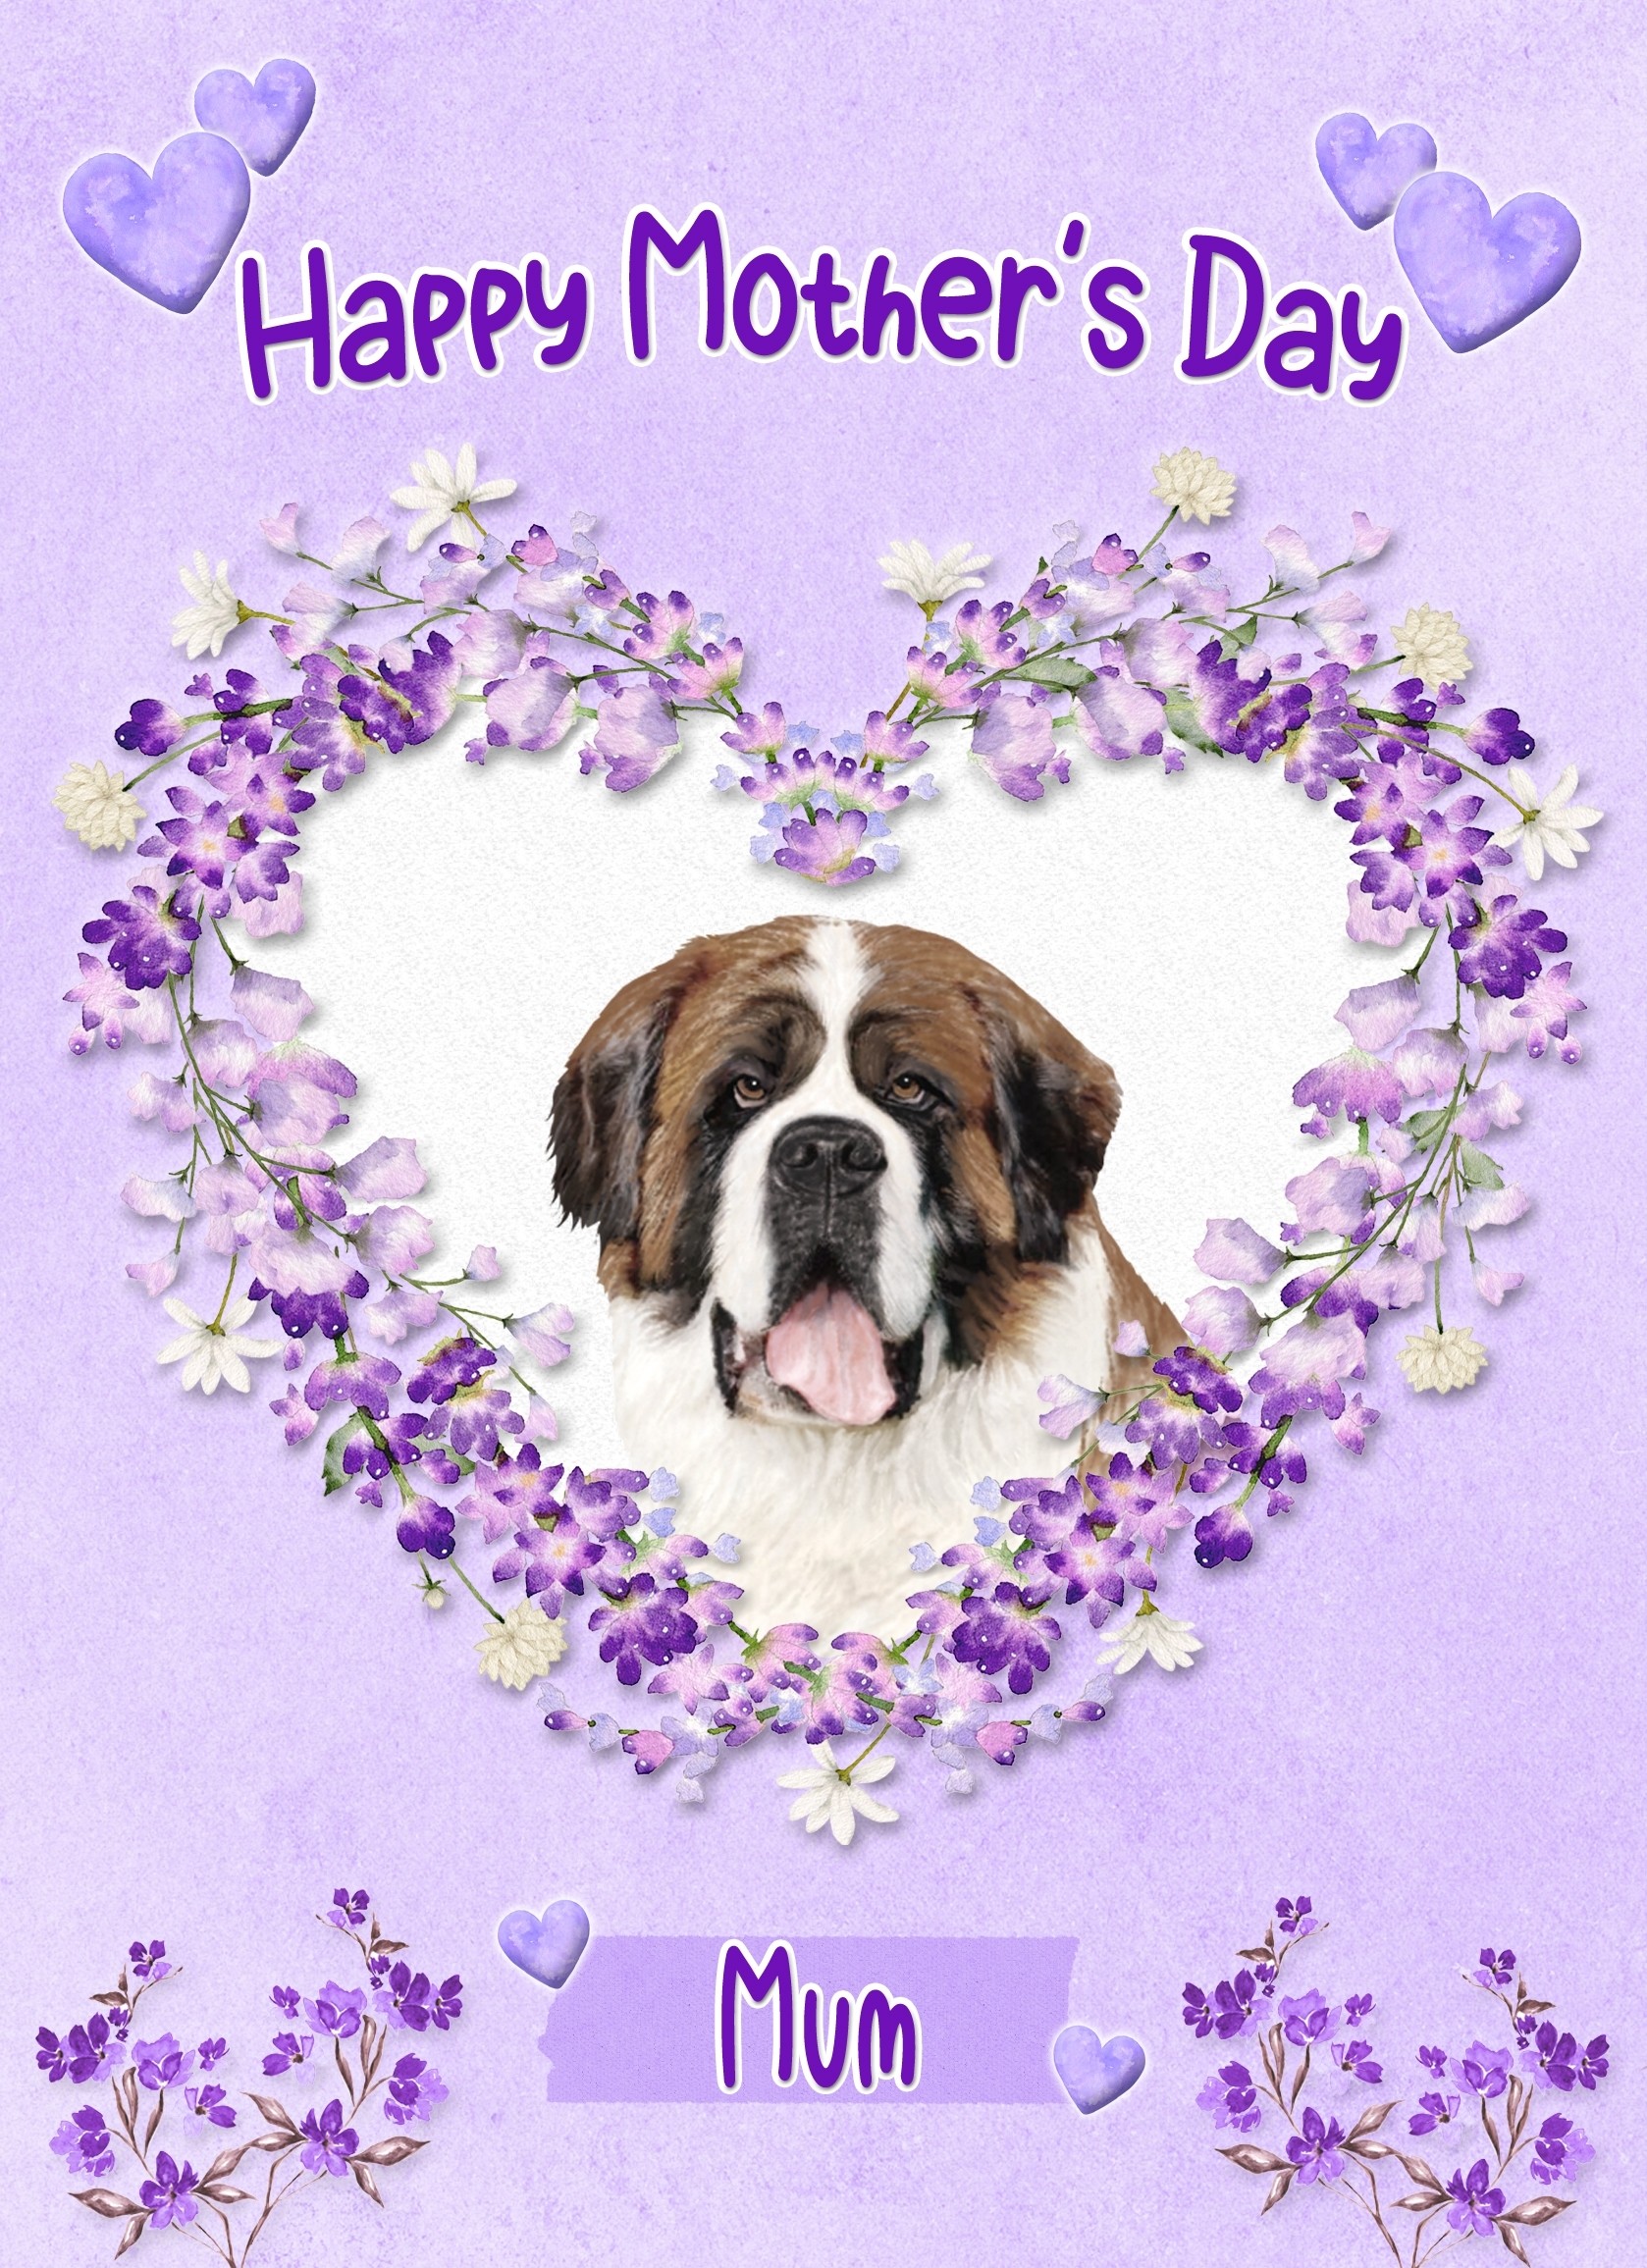 St Bernard Dog Mothers Day Card (Happy Mothers, Mum)